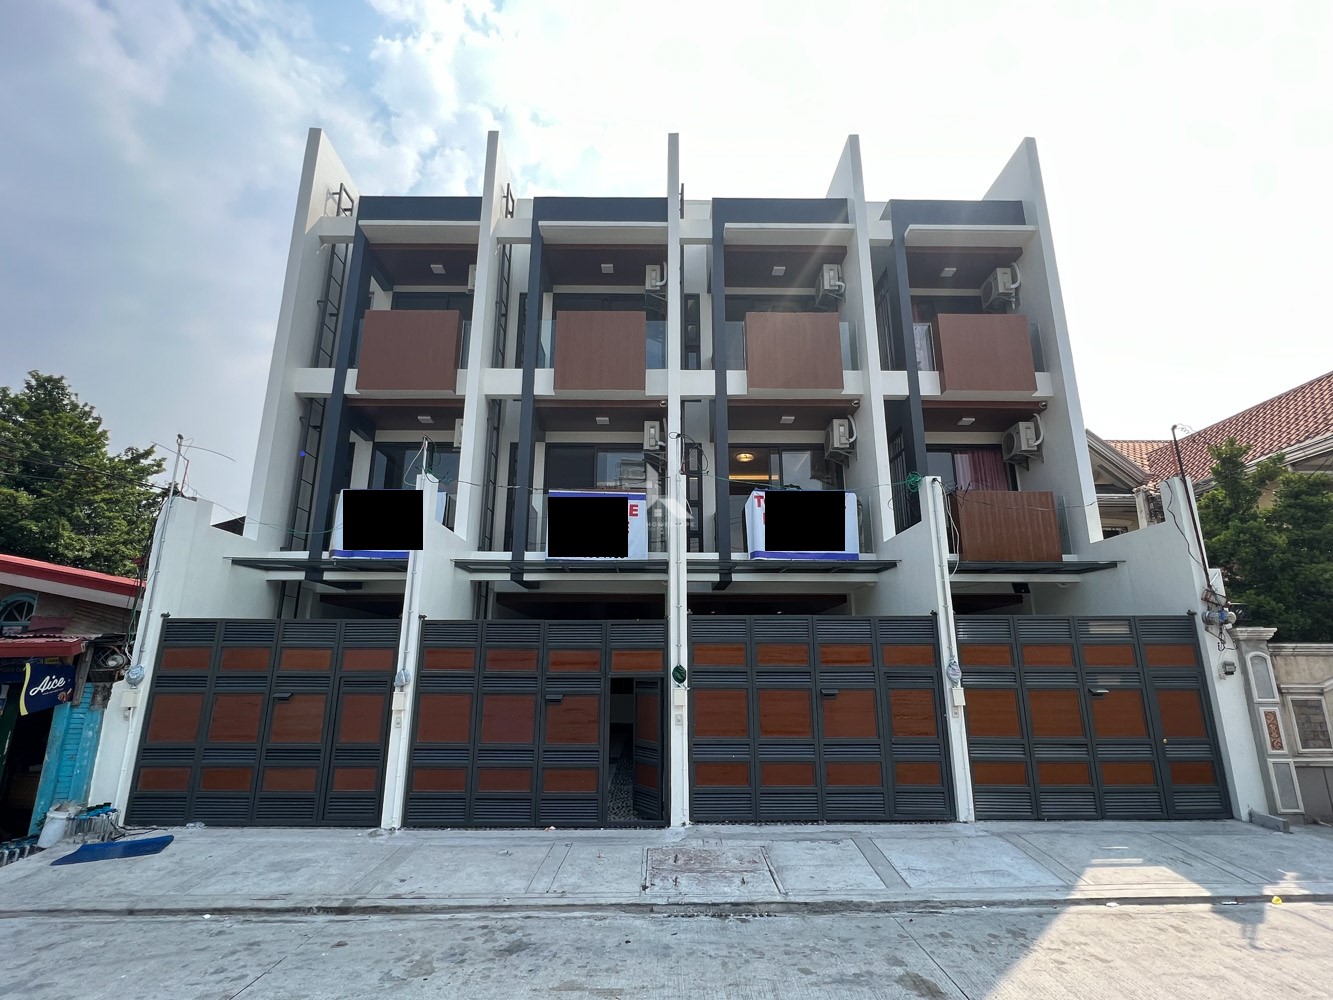 3-Storey Townhouse for sale in Cubao Quezon City￼